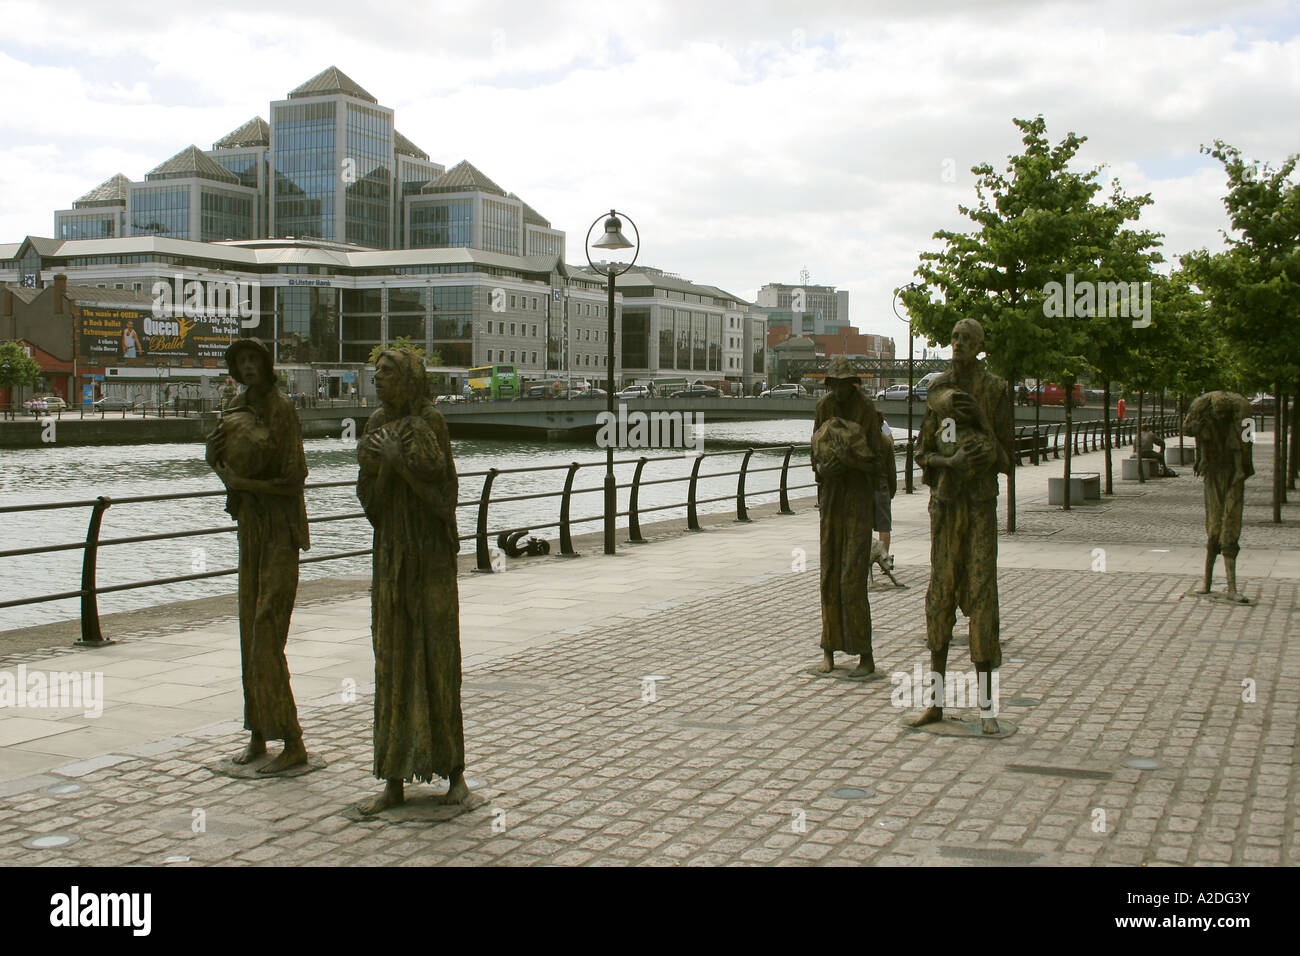 Monument Grande Famine irlandaise Dublin Ireland Banque D'Images